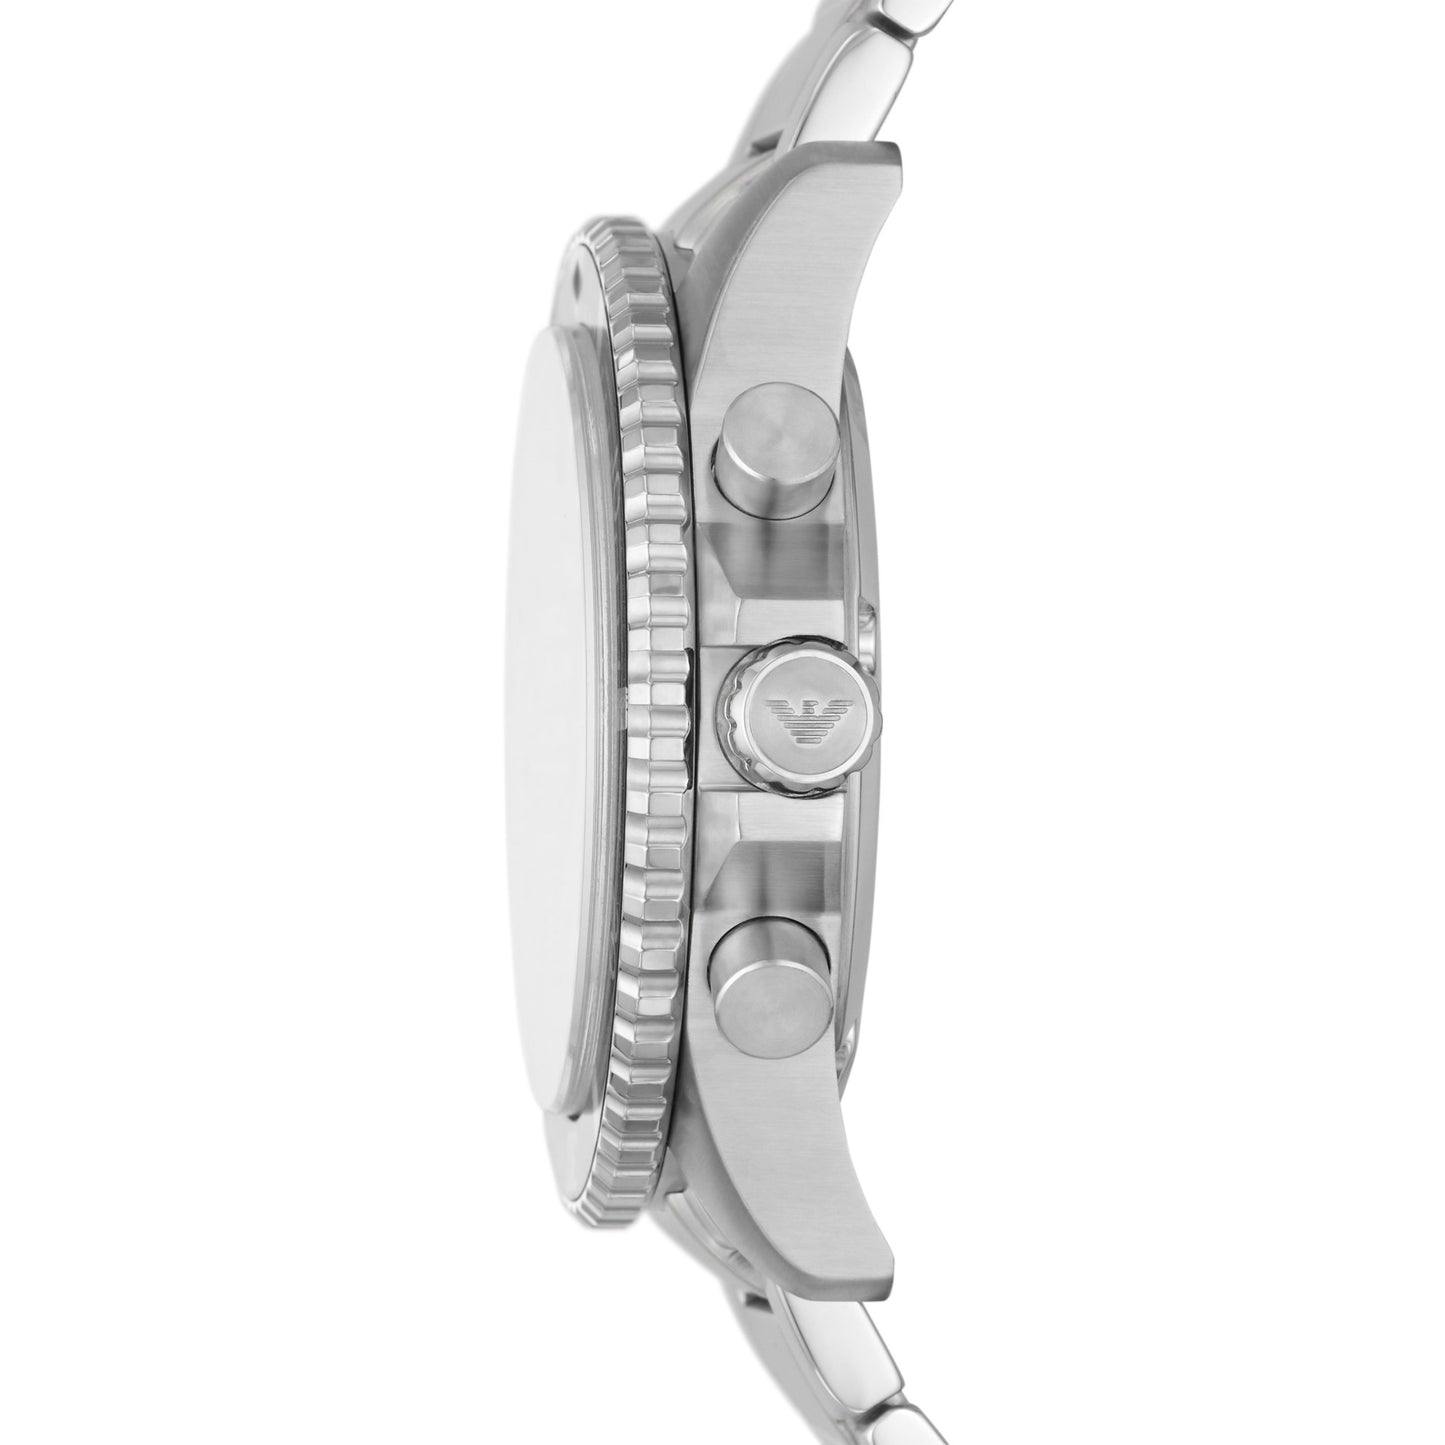 Emporio Armani 42mm Diver Chronographic Black Steel Watch